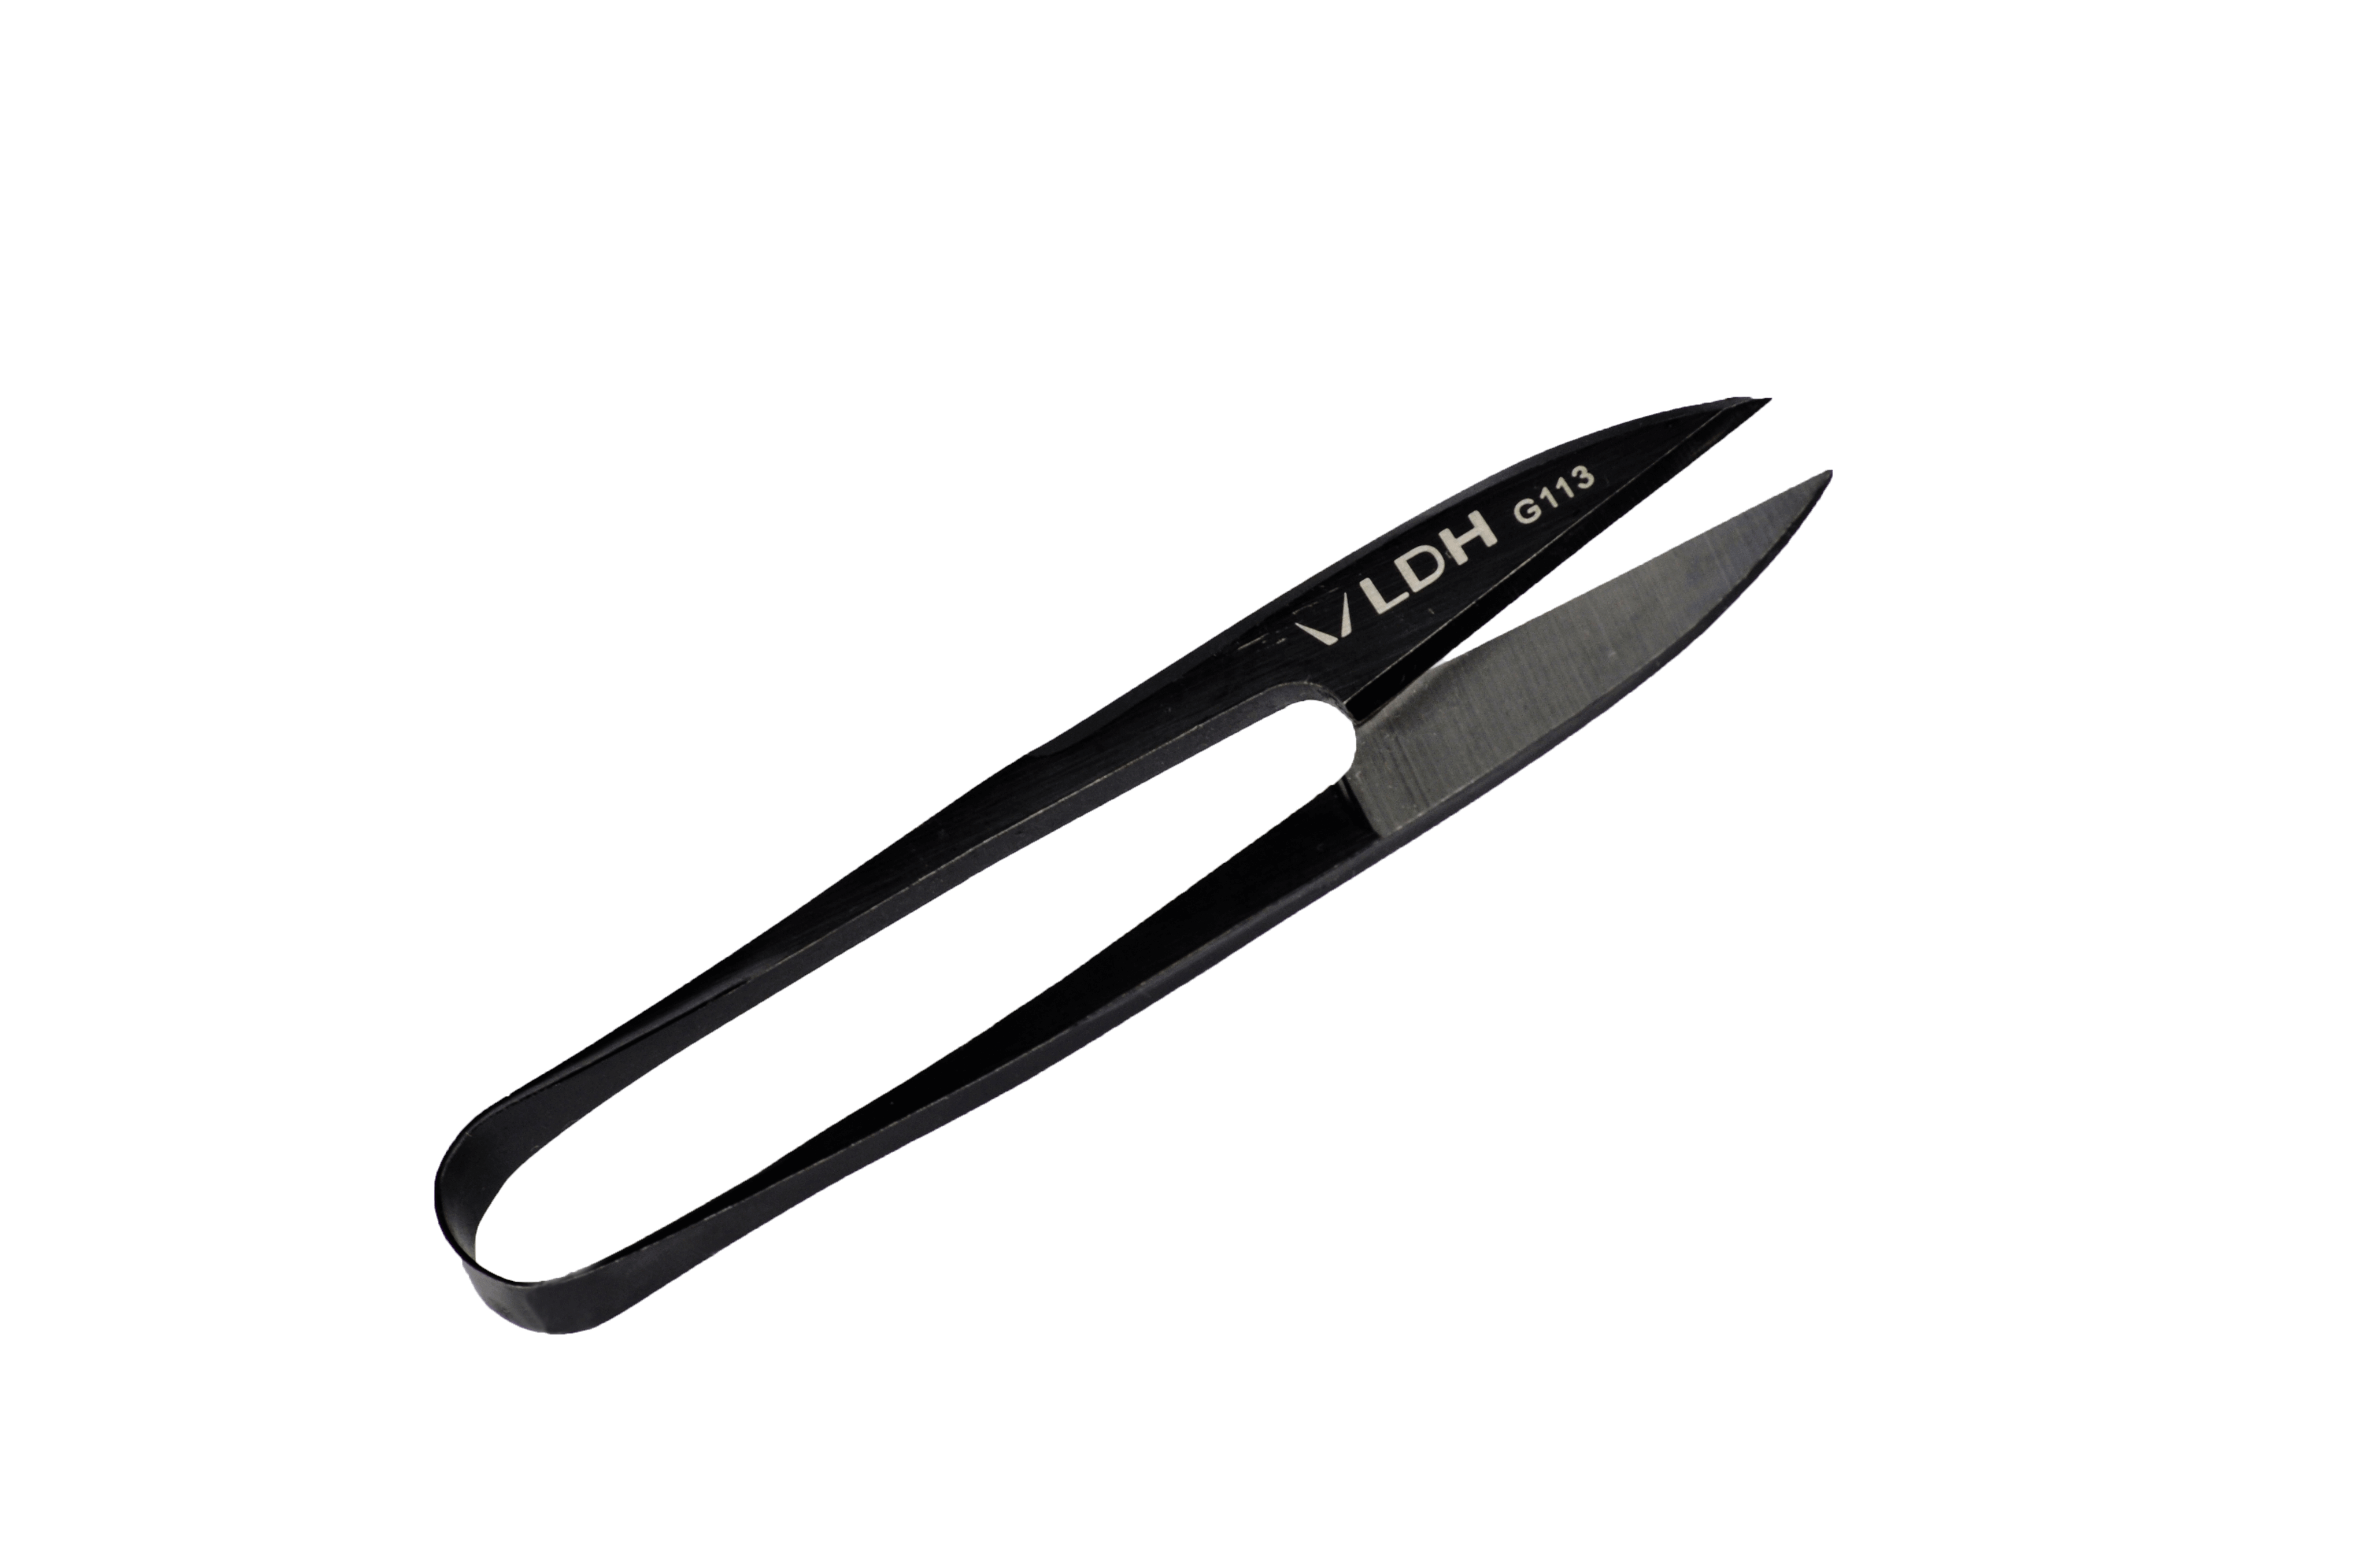 Kuroha Thread Snips Scissors (scissor 16)